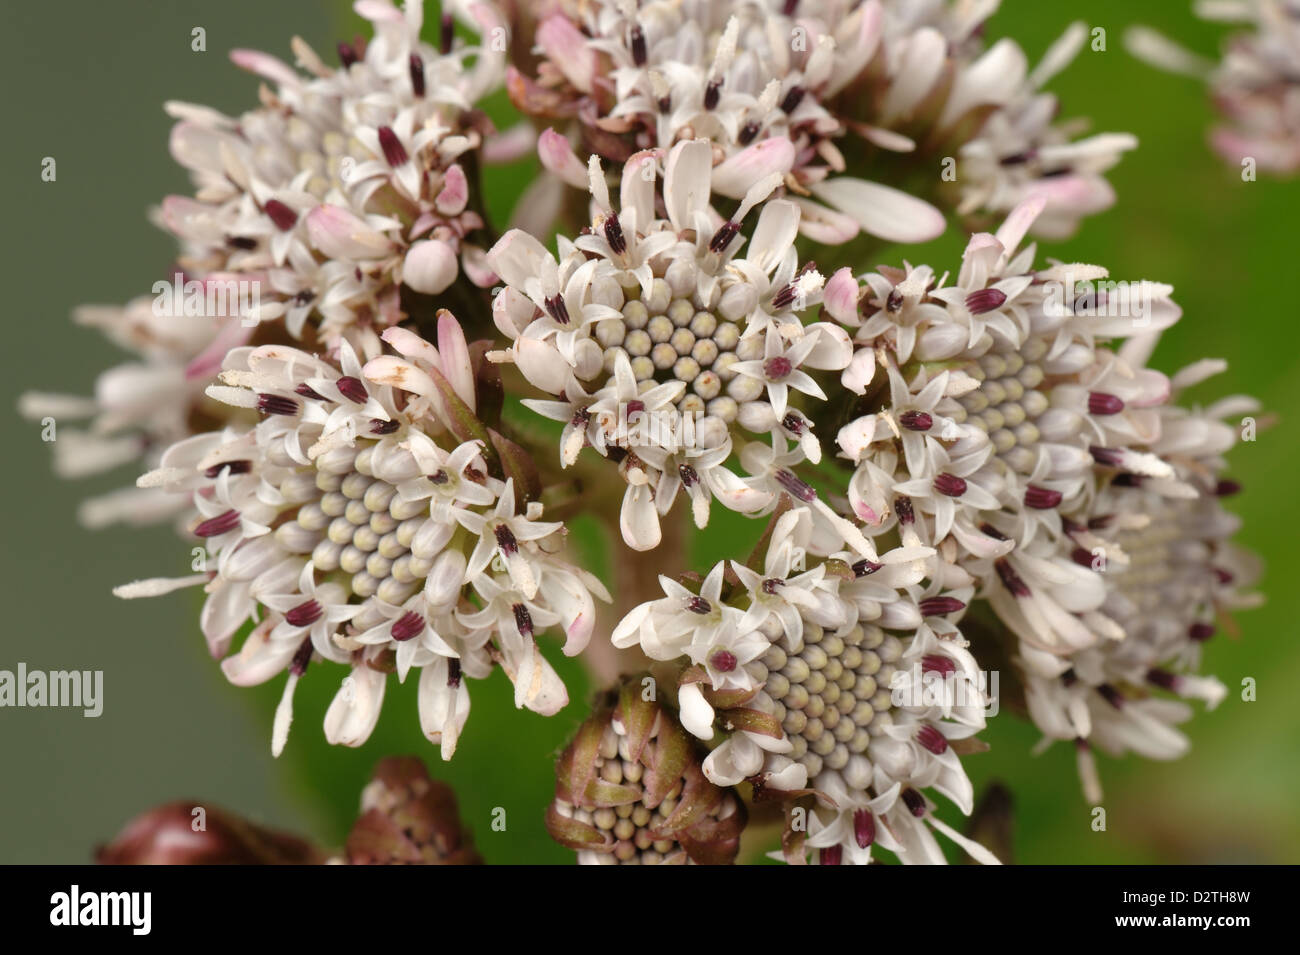 Flower of common butterbur, Petasites hybridus, an early flowering composite plant Stock Photo